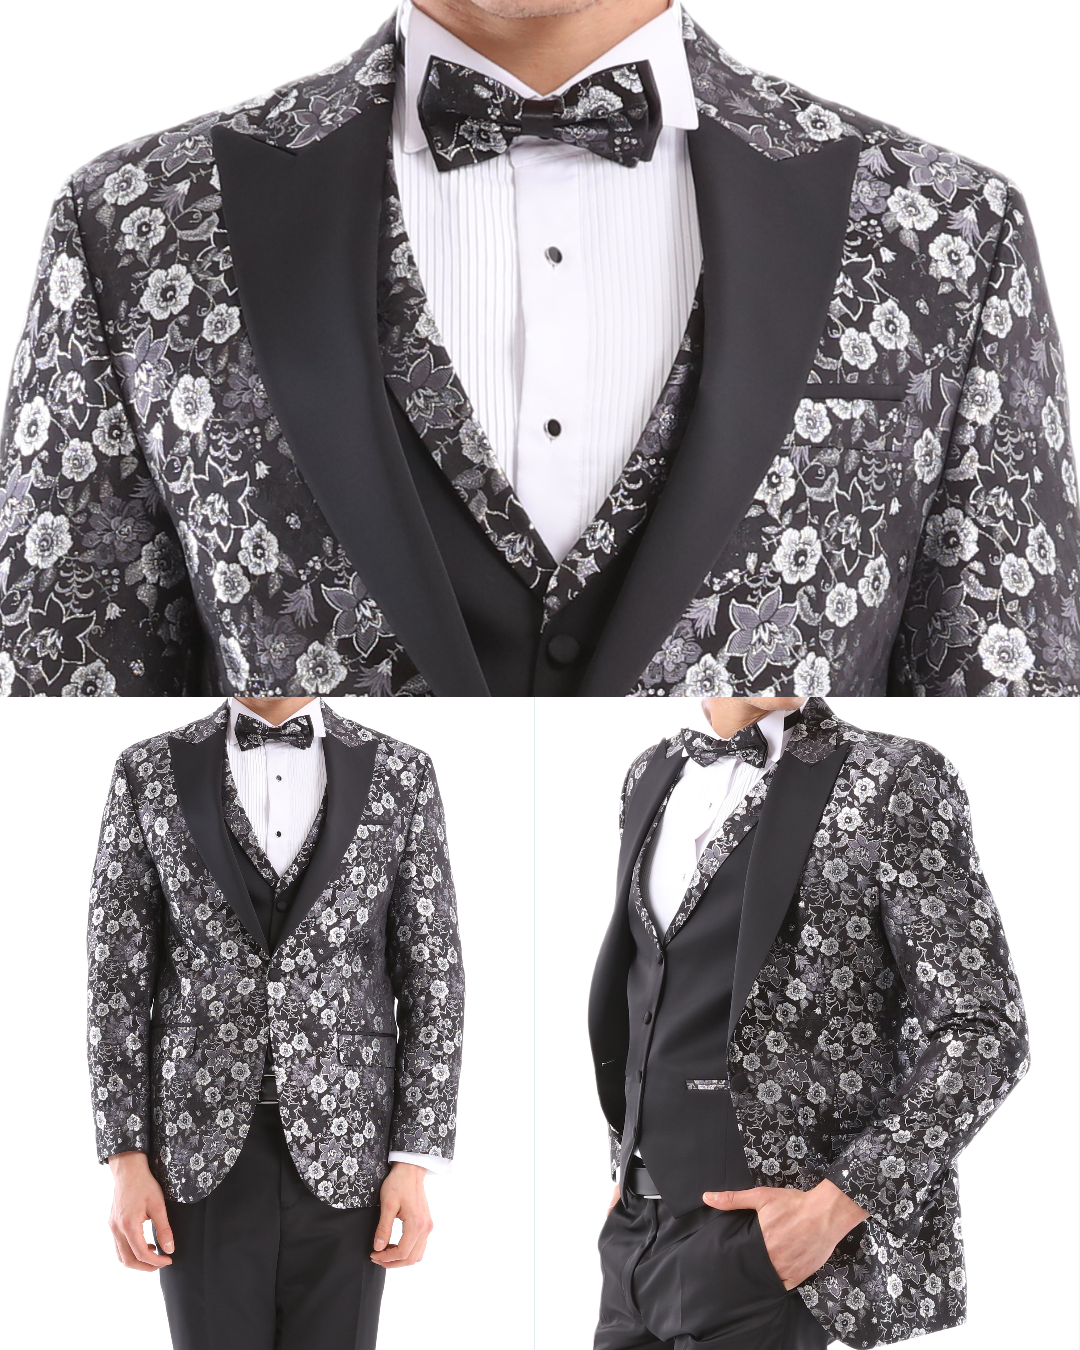 PLATINUM ROSE - Grey Jacquard Four Piece Dinner & Wedding Suit